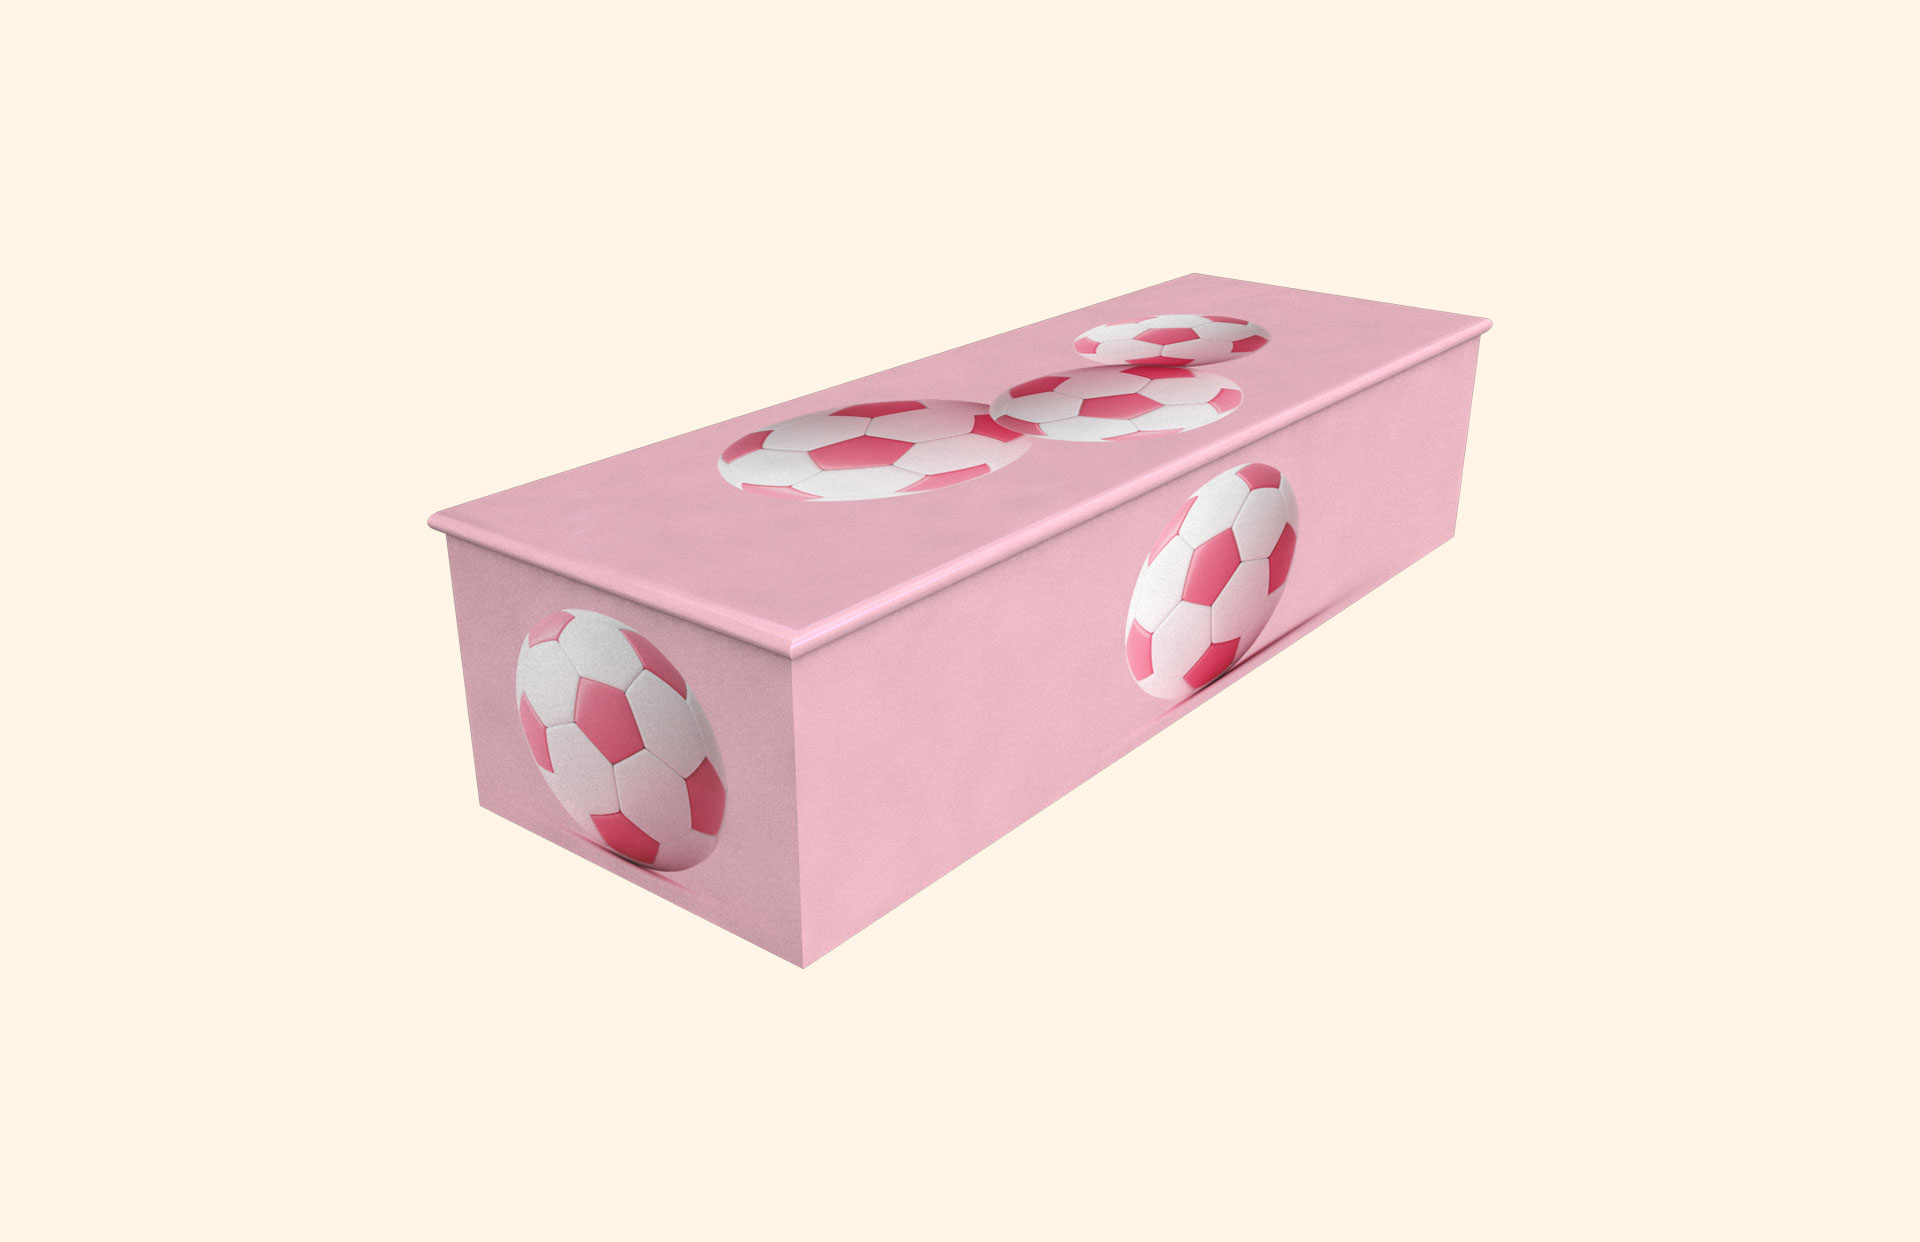 Pink Play design on a child wooden casket